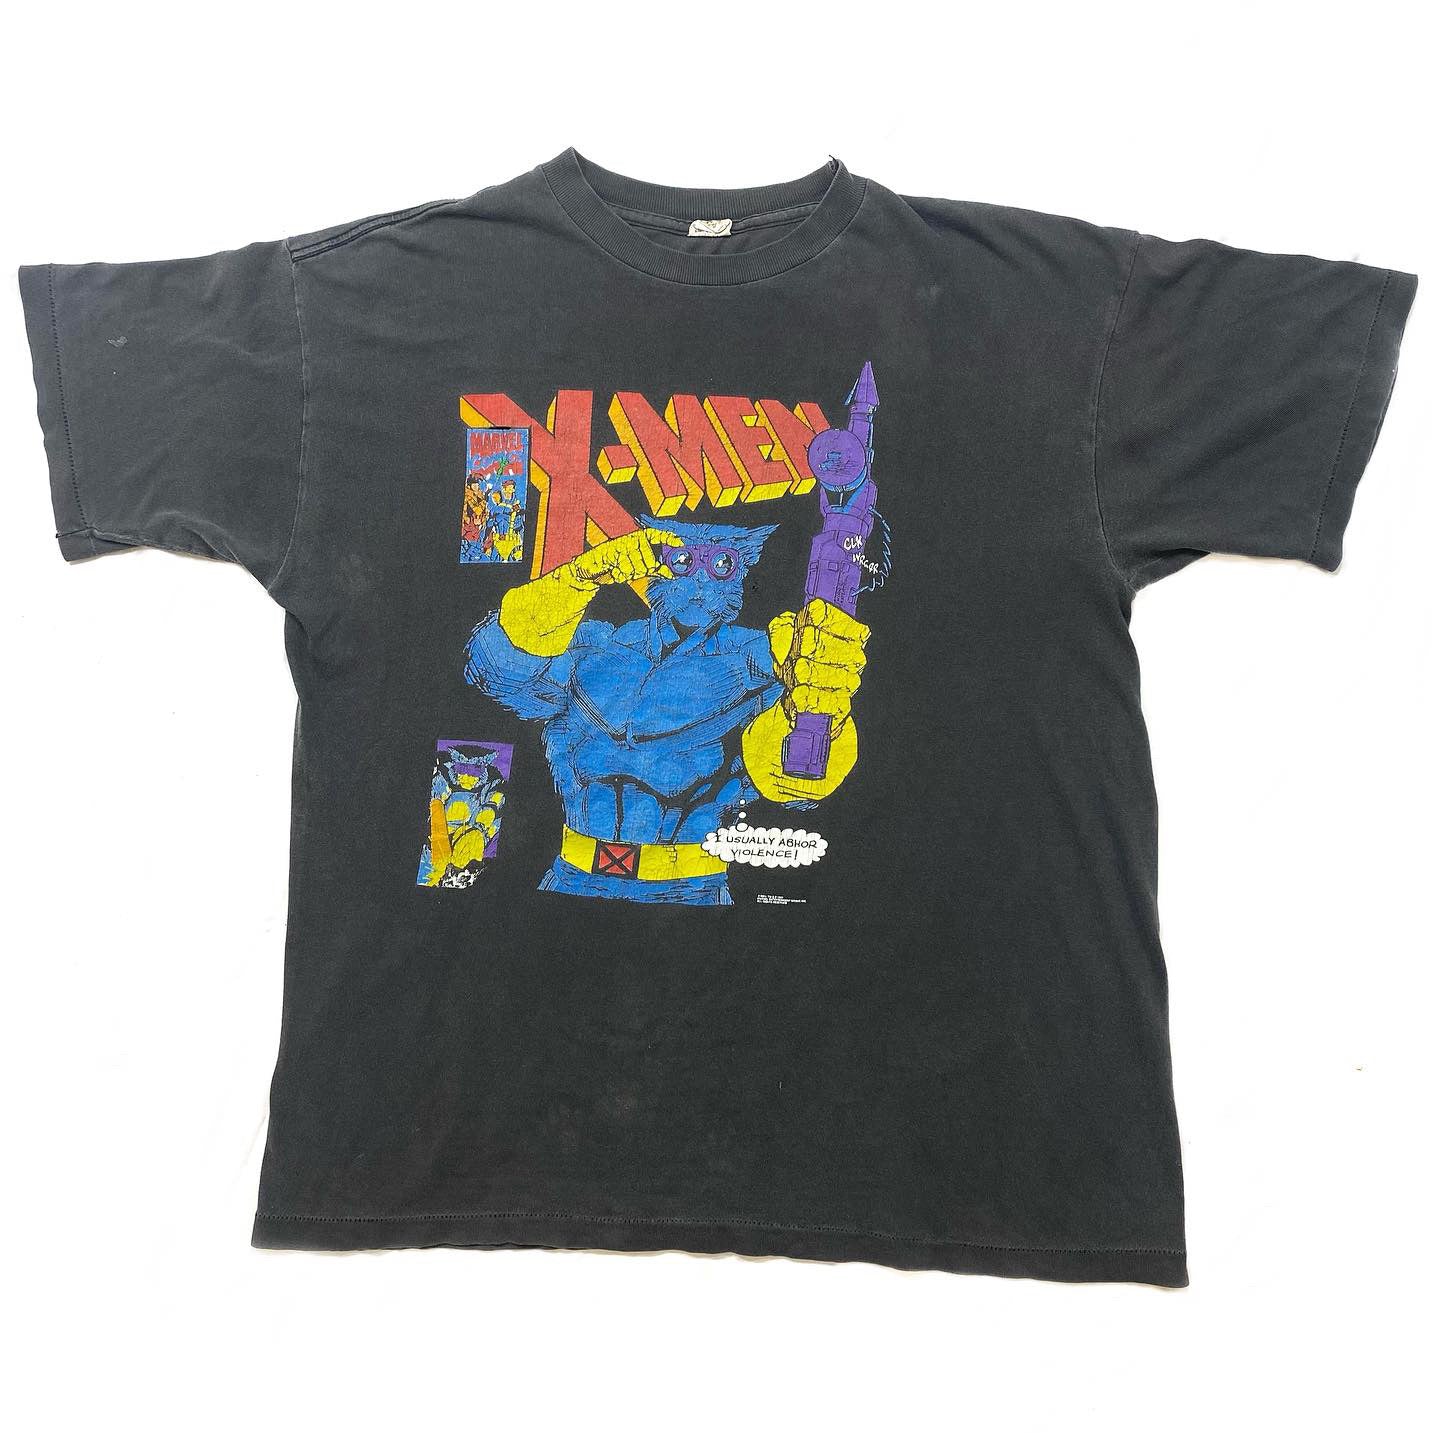 INQUIRE X-Men Beast graphic t-shirt 1993 Large